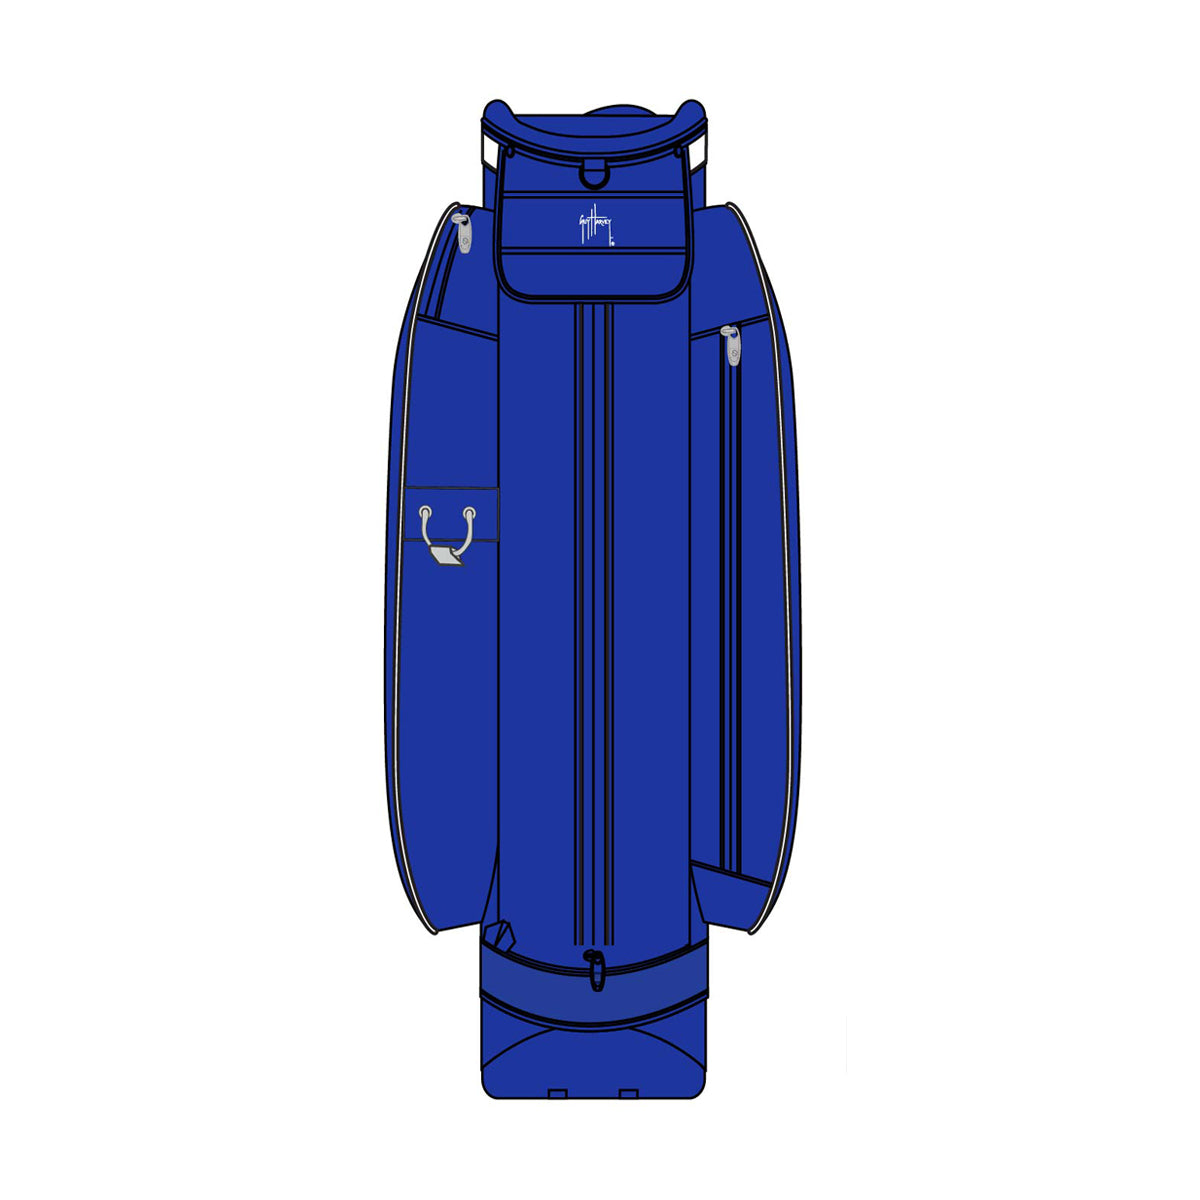 Blue Marlin APEX Hybrid Cart Golf Bag